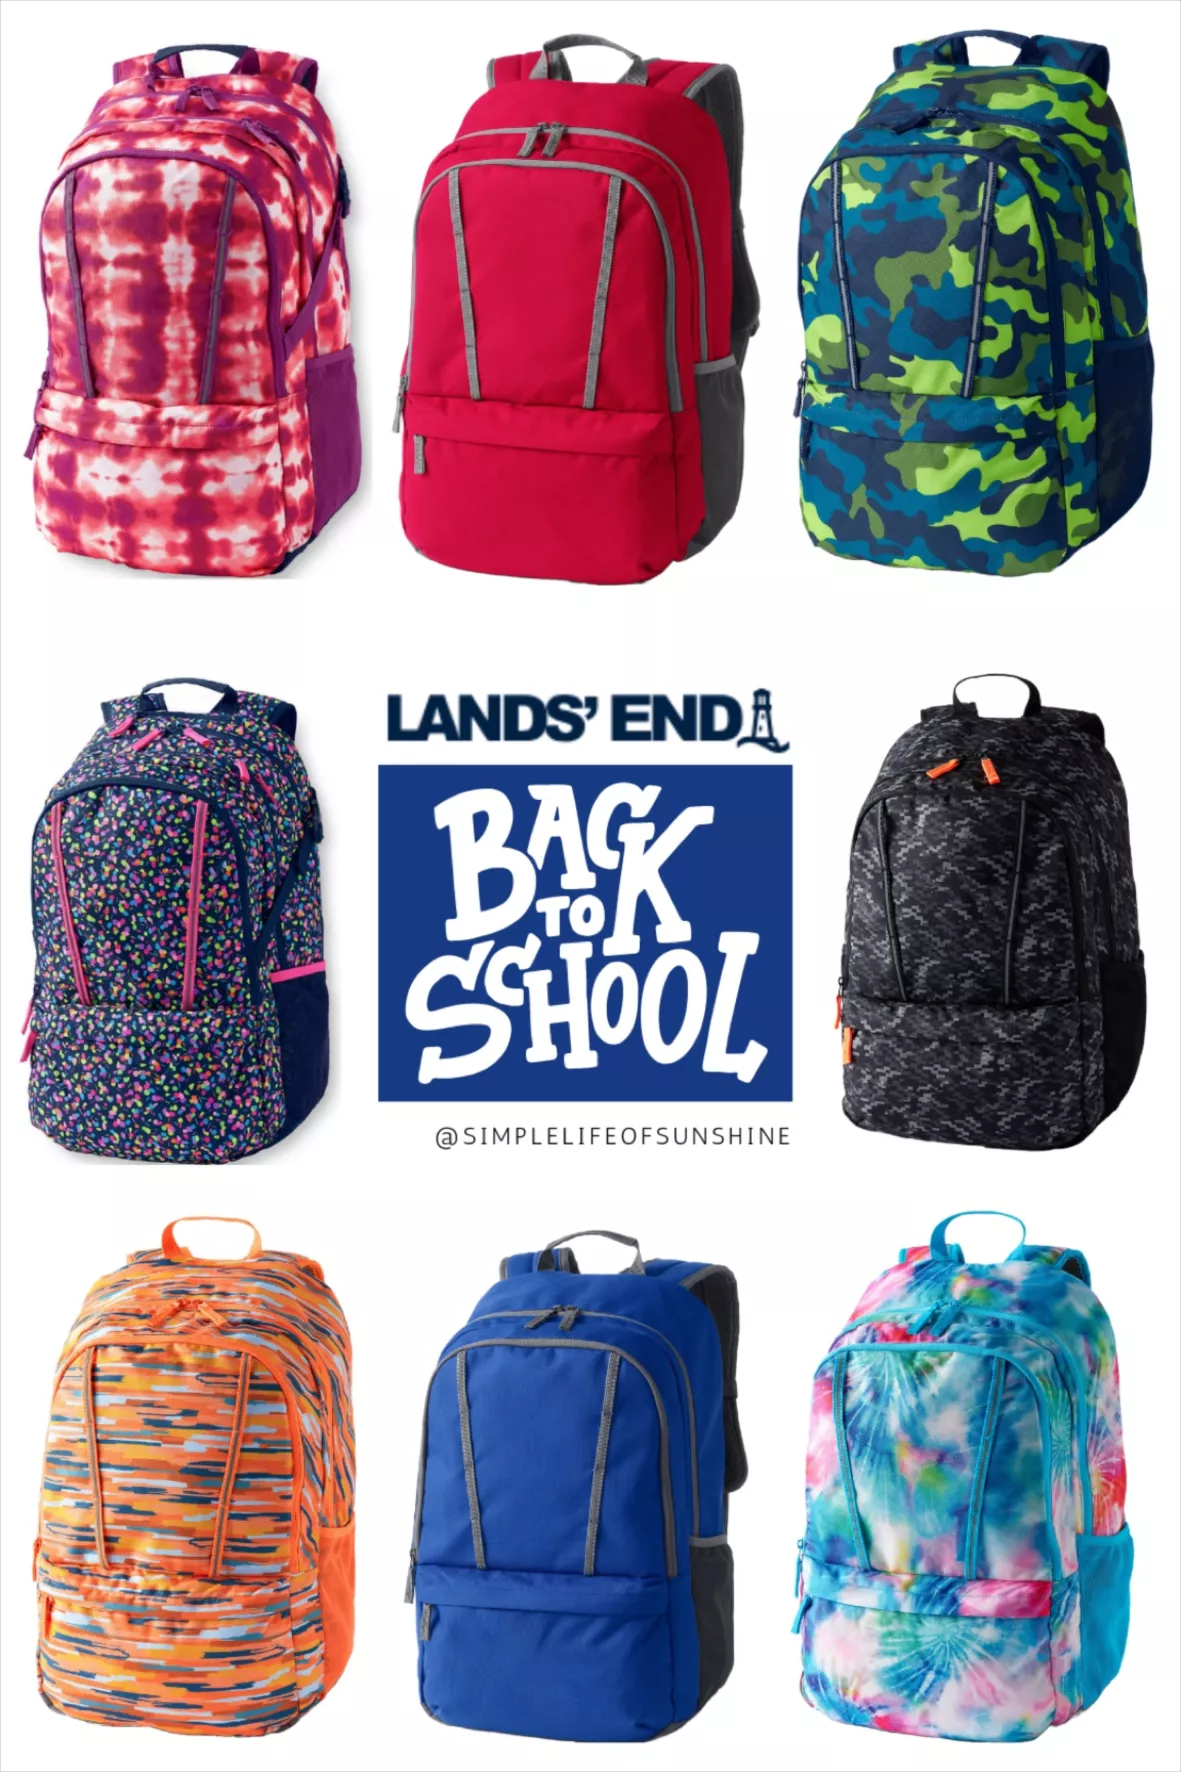 Kids ClassMate Large Backpack